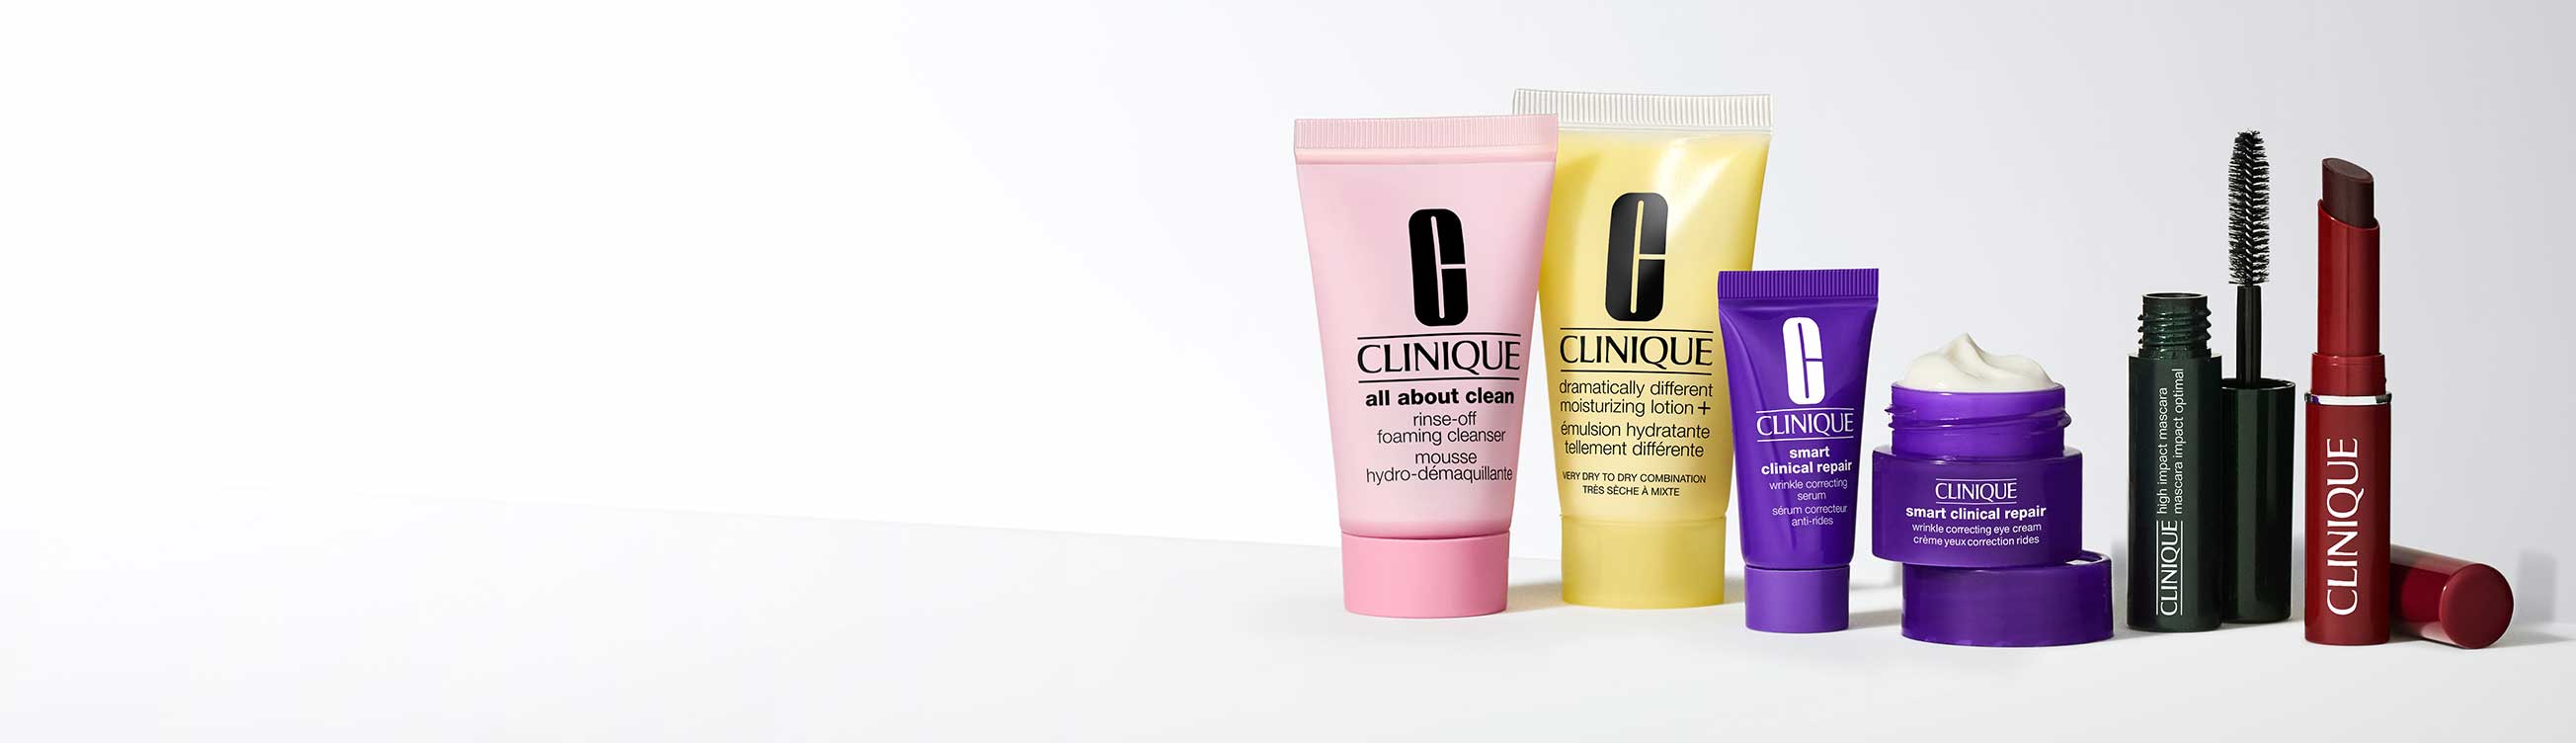 Clinique | Dermatology Skincare, Makeup, Fragrances & Gifts